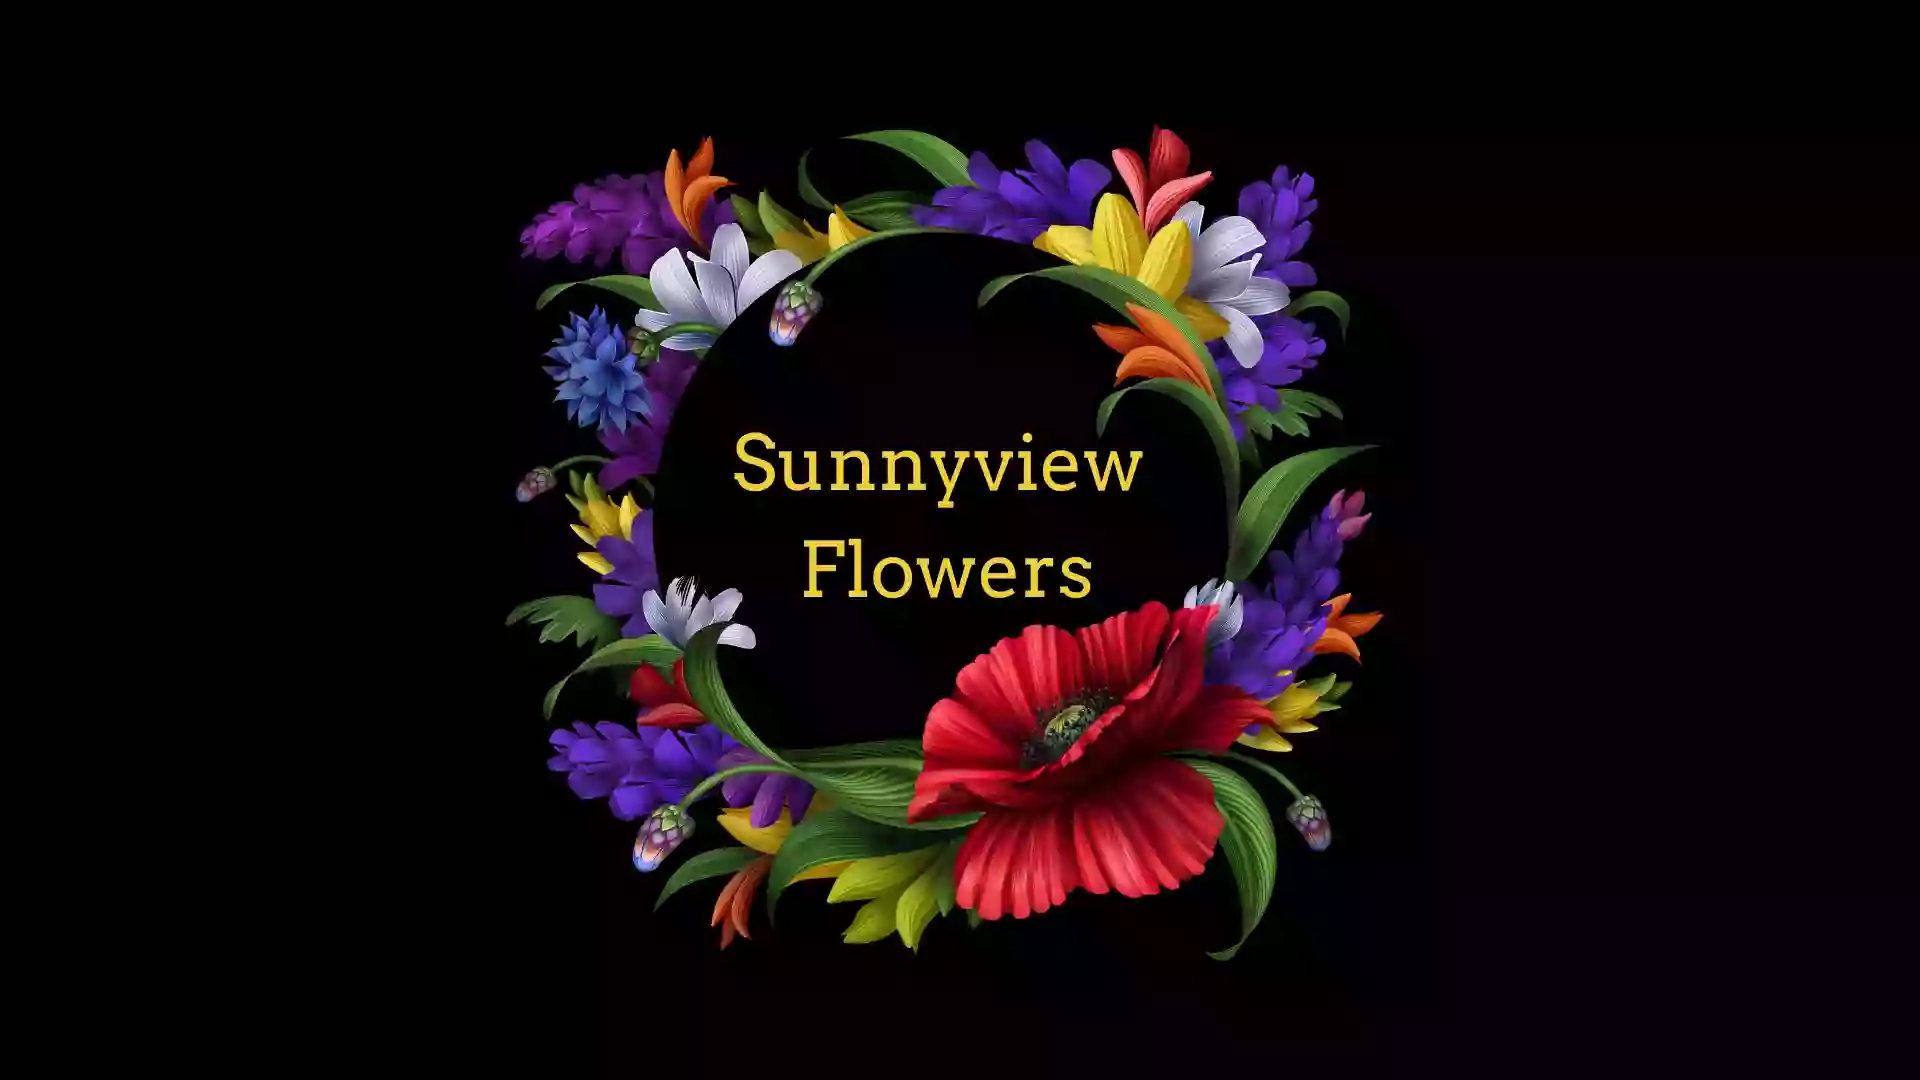 Sunnyview Flowers